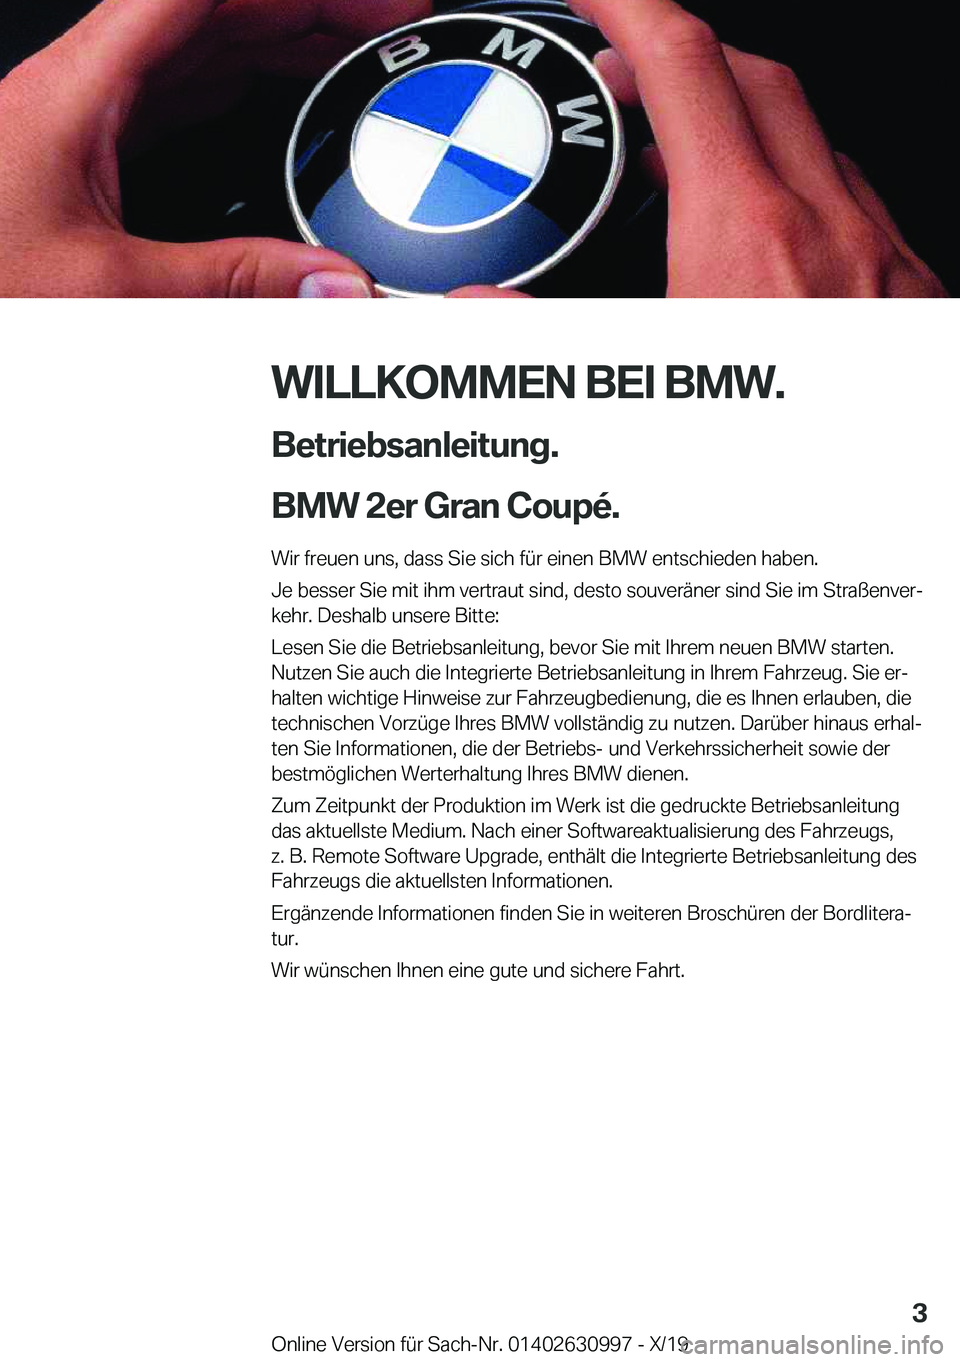 BMW 2 SERIES GRAN COUPE 2020  Betriebsanleitungen (in German) �W�I�L�L�K�O�M�M�E�N��B�E�I��B�M�W�.�B�e�t�r�i�e�b�s�a�n�l�e�i�t�u�n�g�.
�B�M�W��2�e�r��G�r�a�n��C�o�u�p�